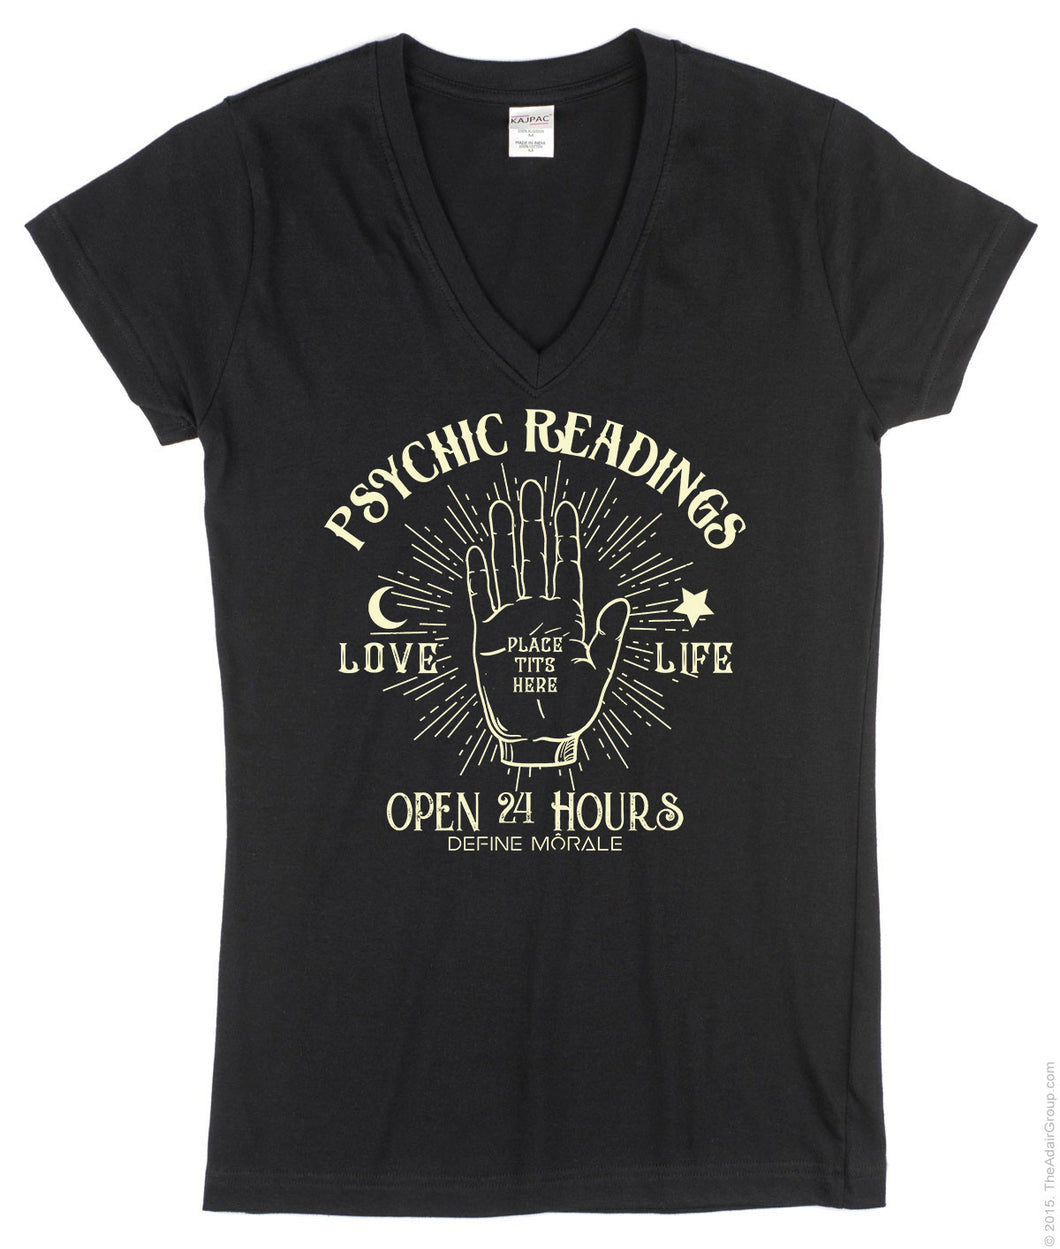 Psychic Reading - Women's Casual V-Neck Shirt